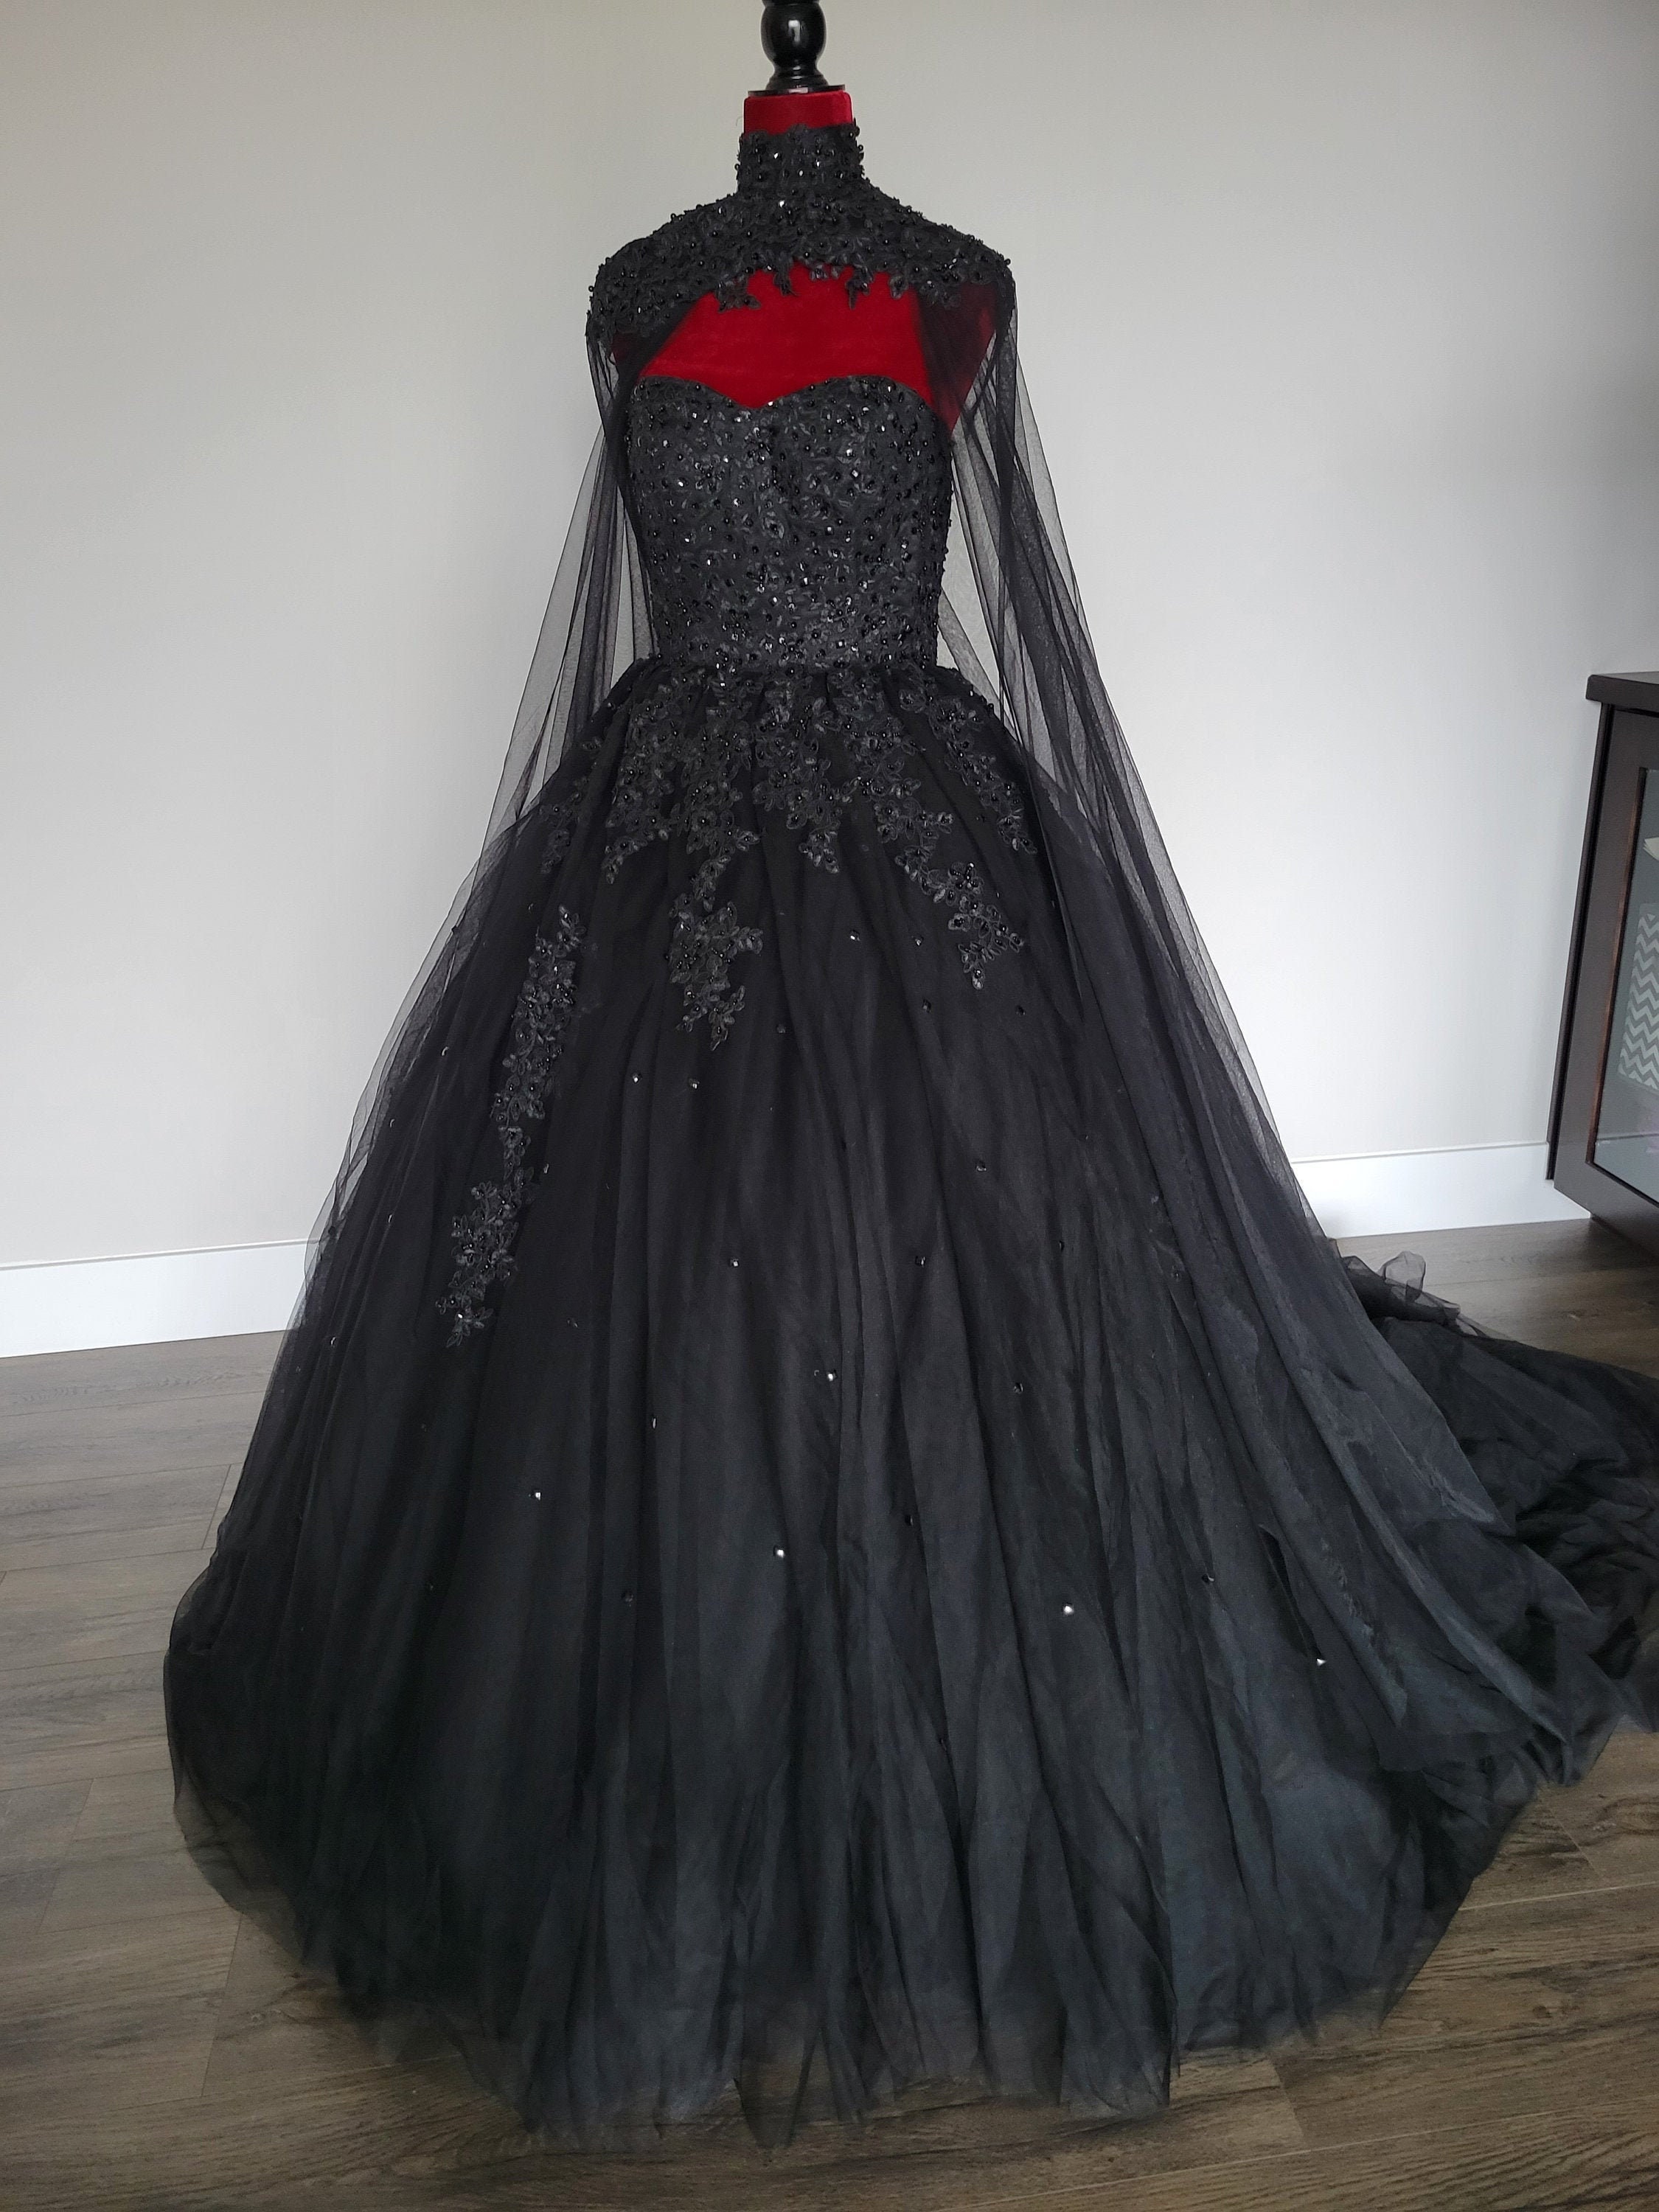 Gothic Black Full Ballgown with High Neck Veil Wedding Dress | Etsy